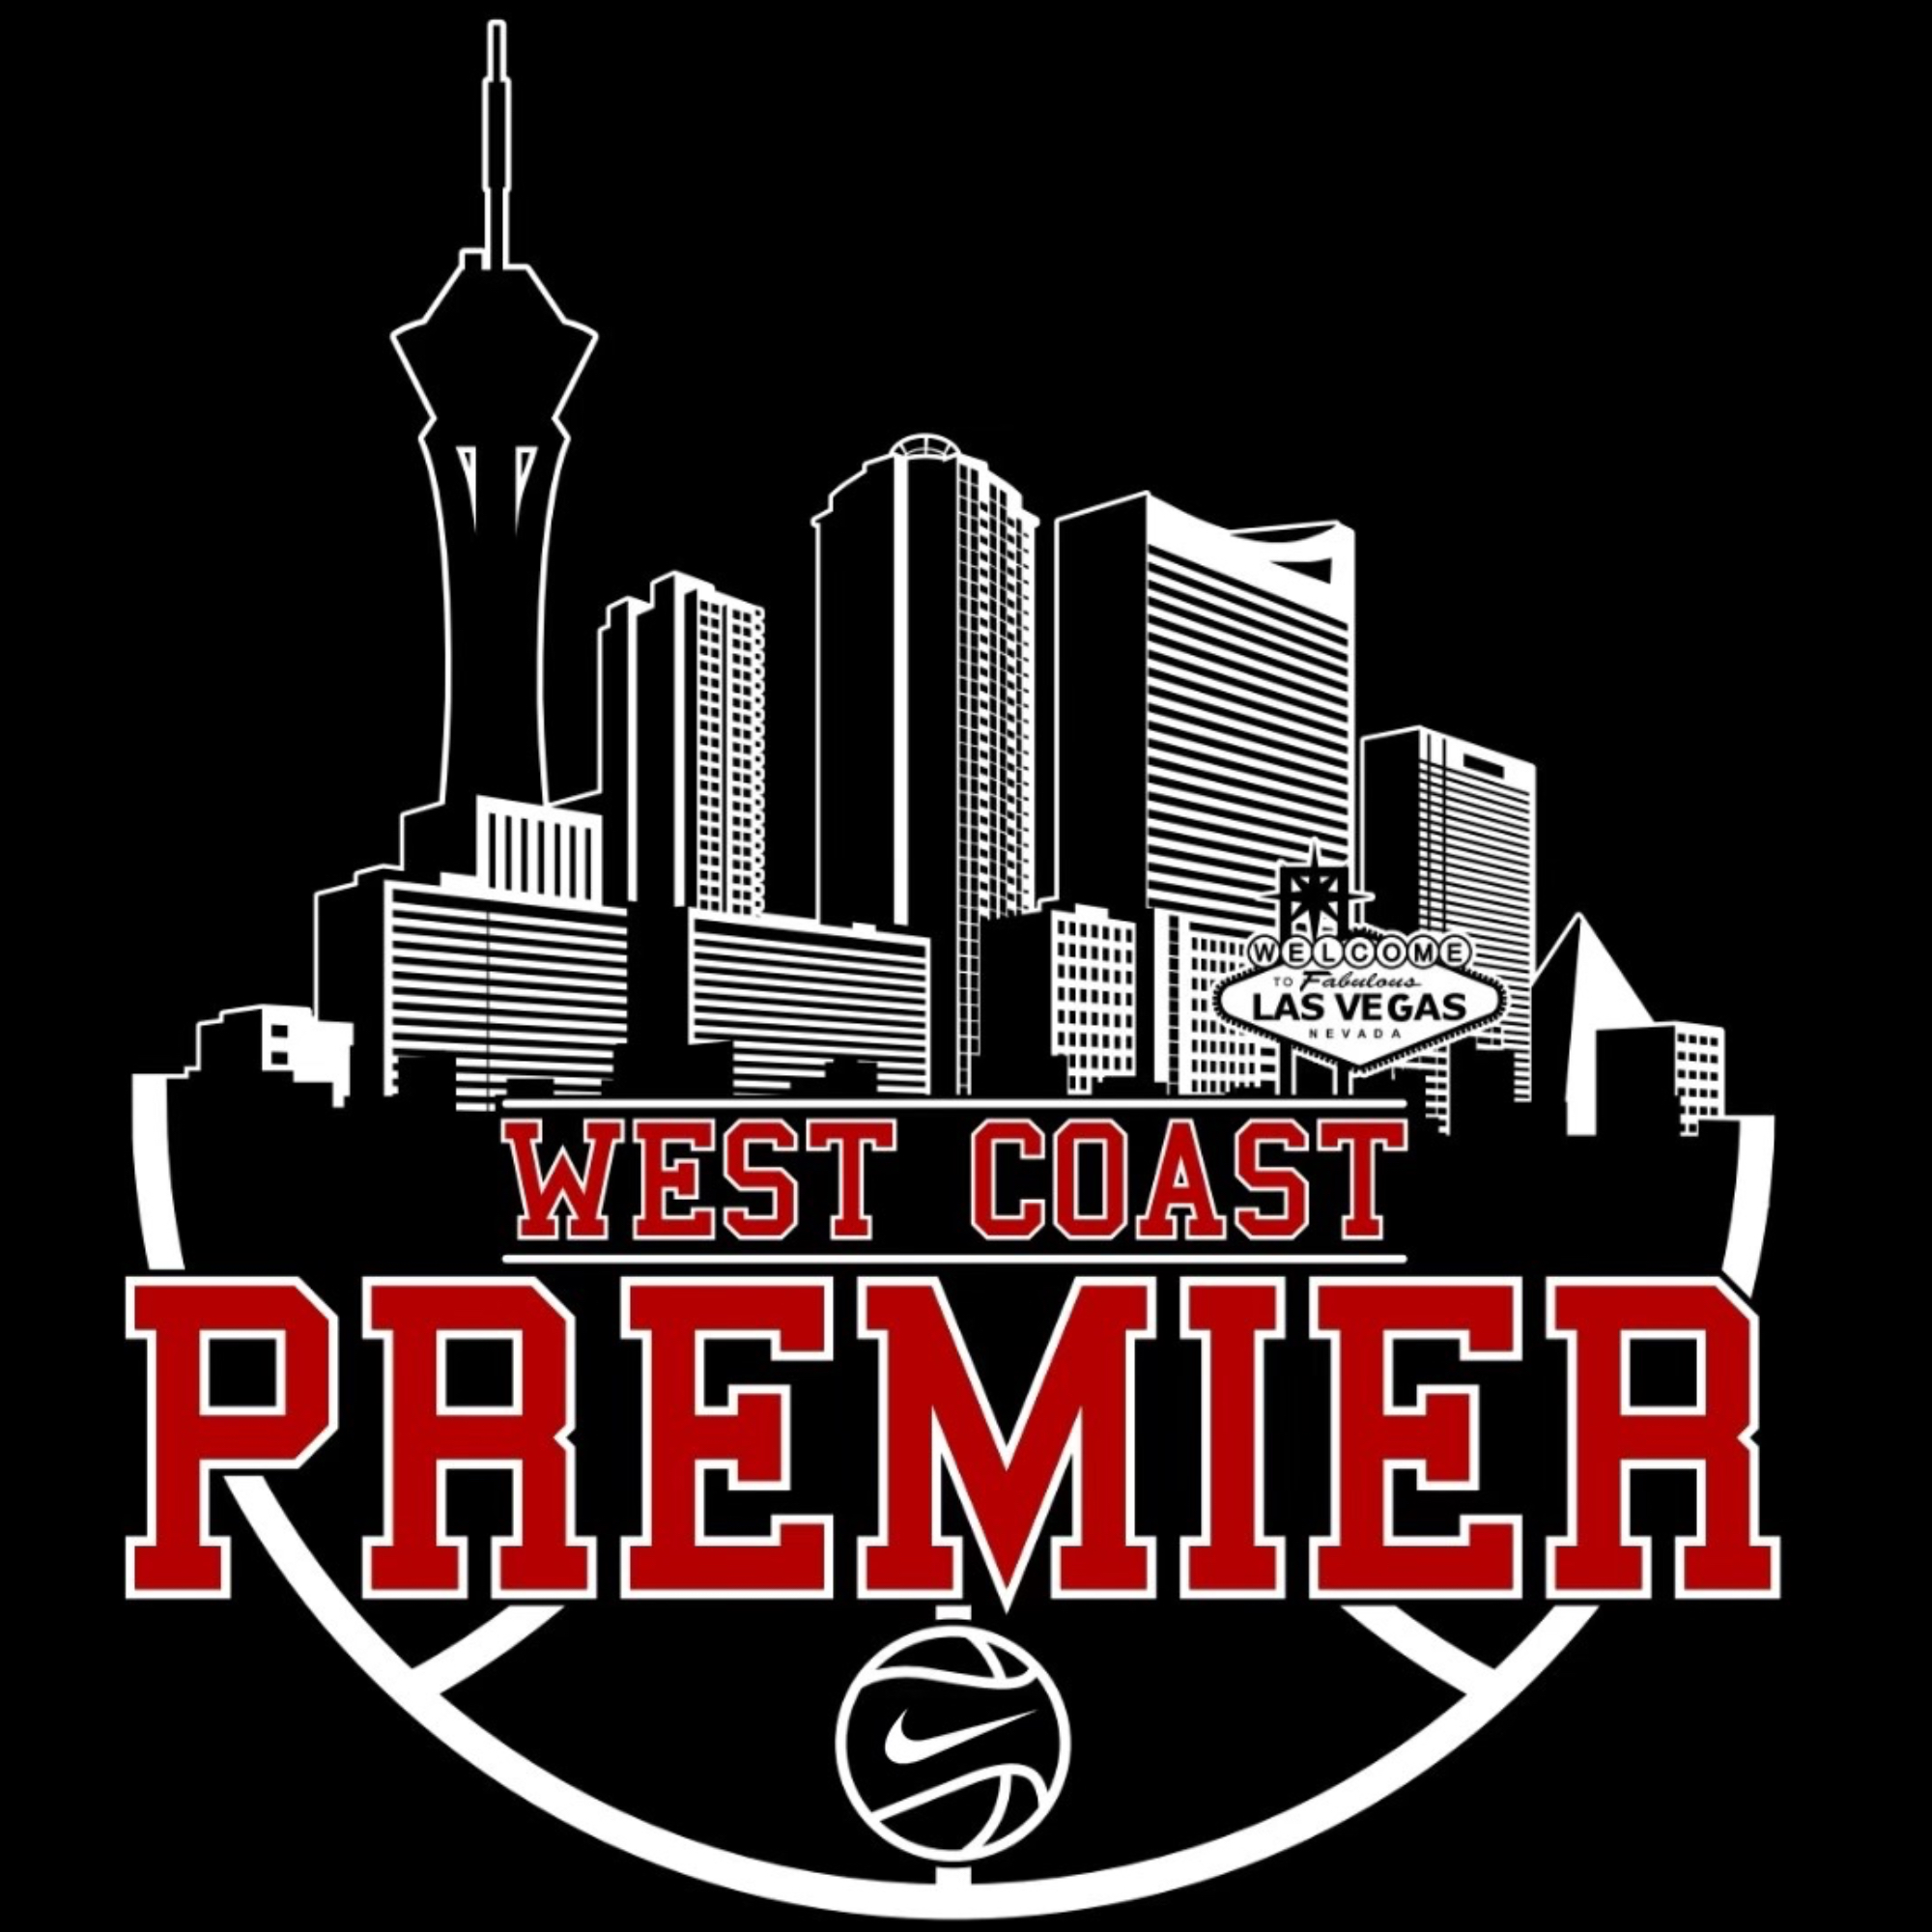 The official logo of West Coast Premier NV